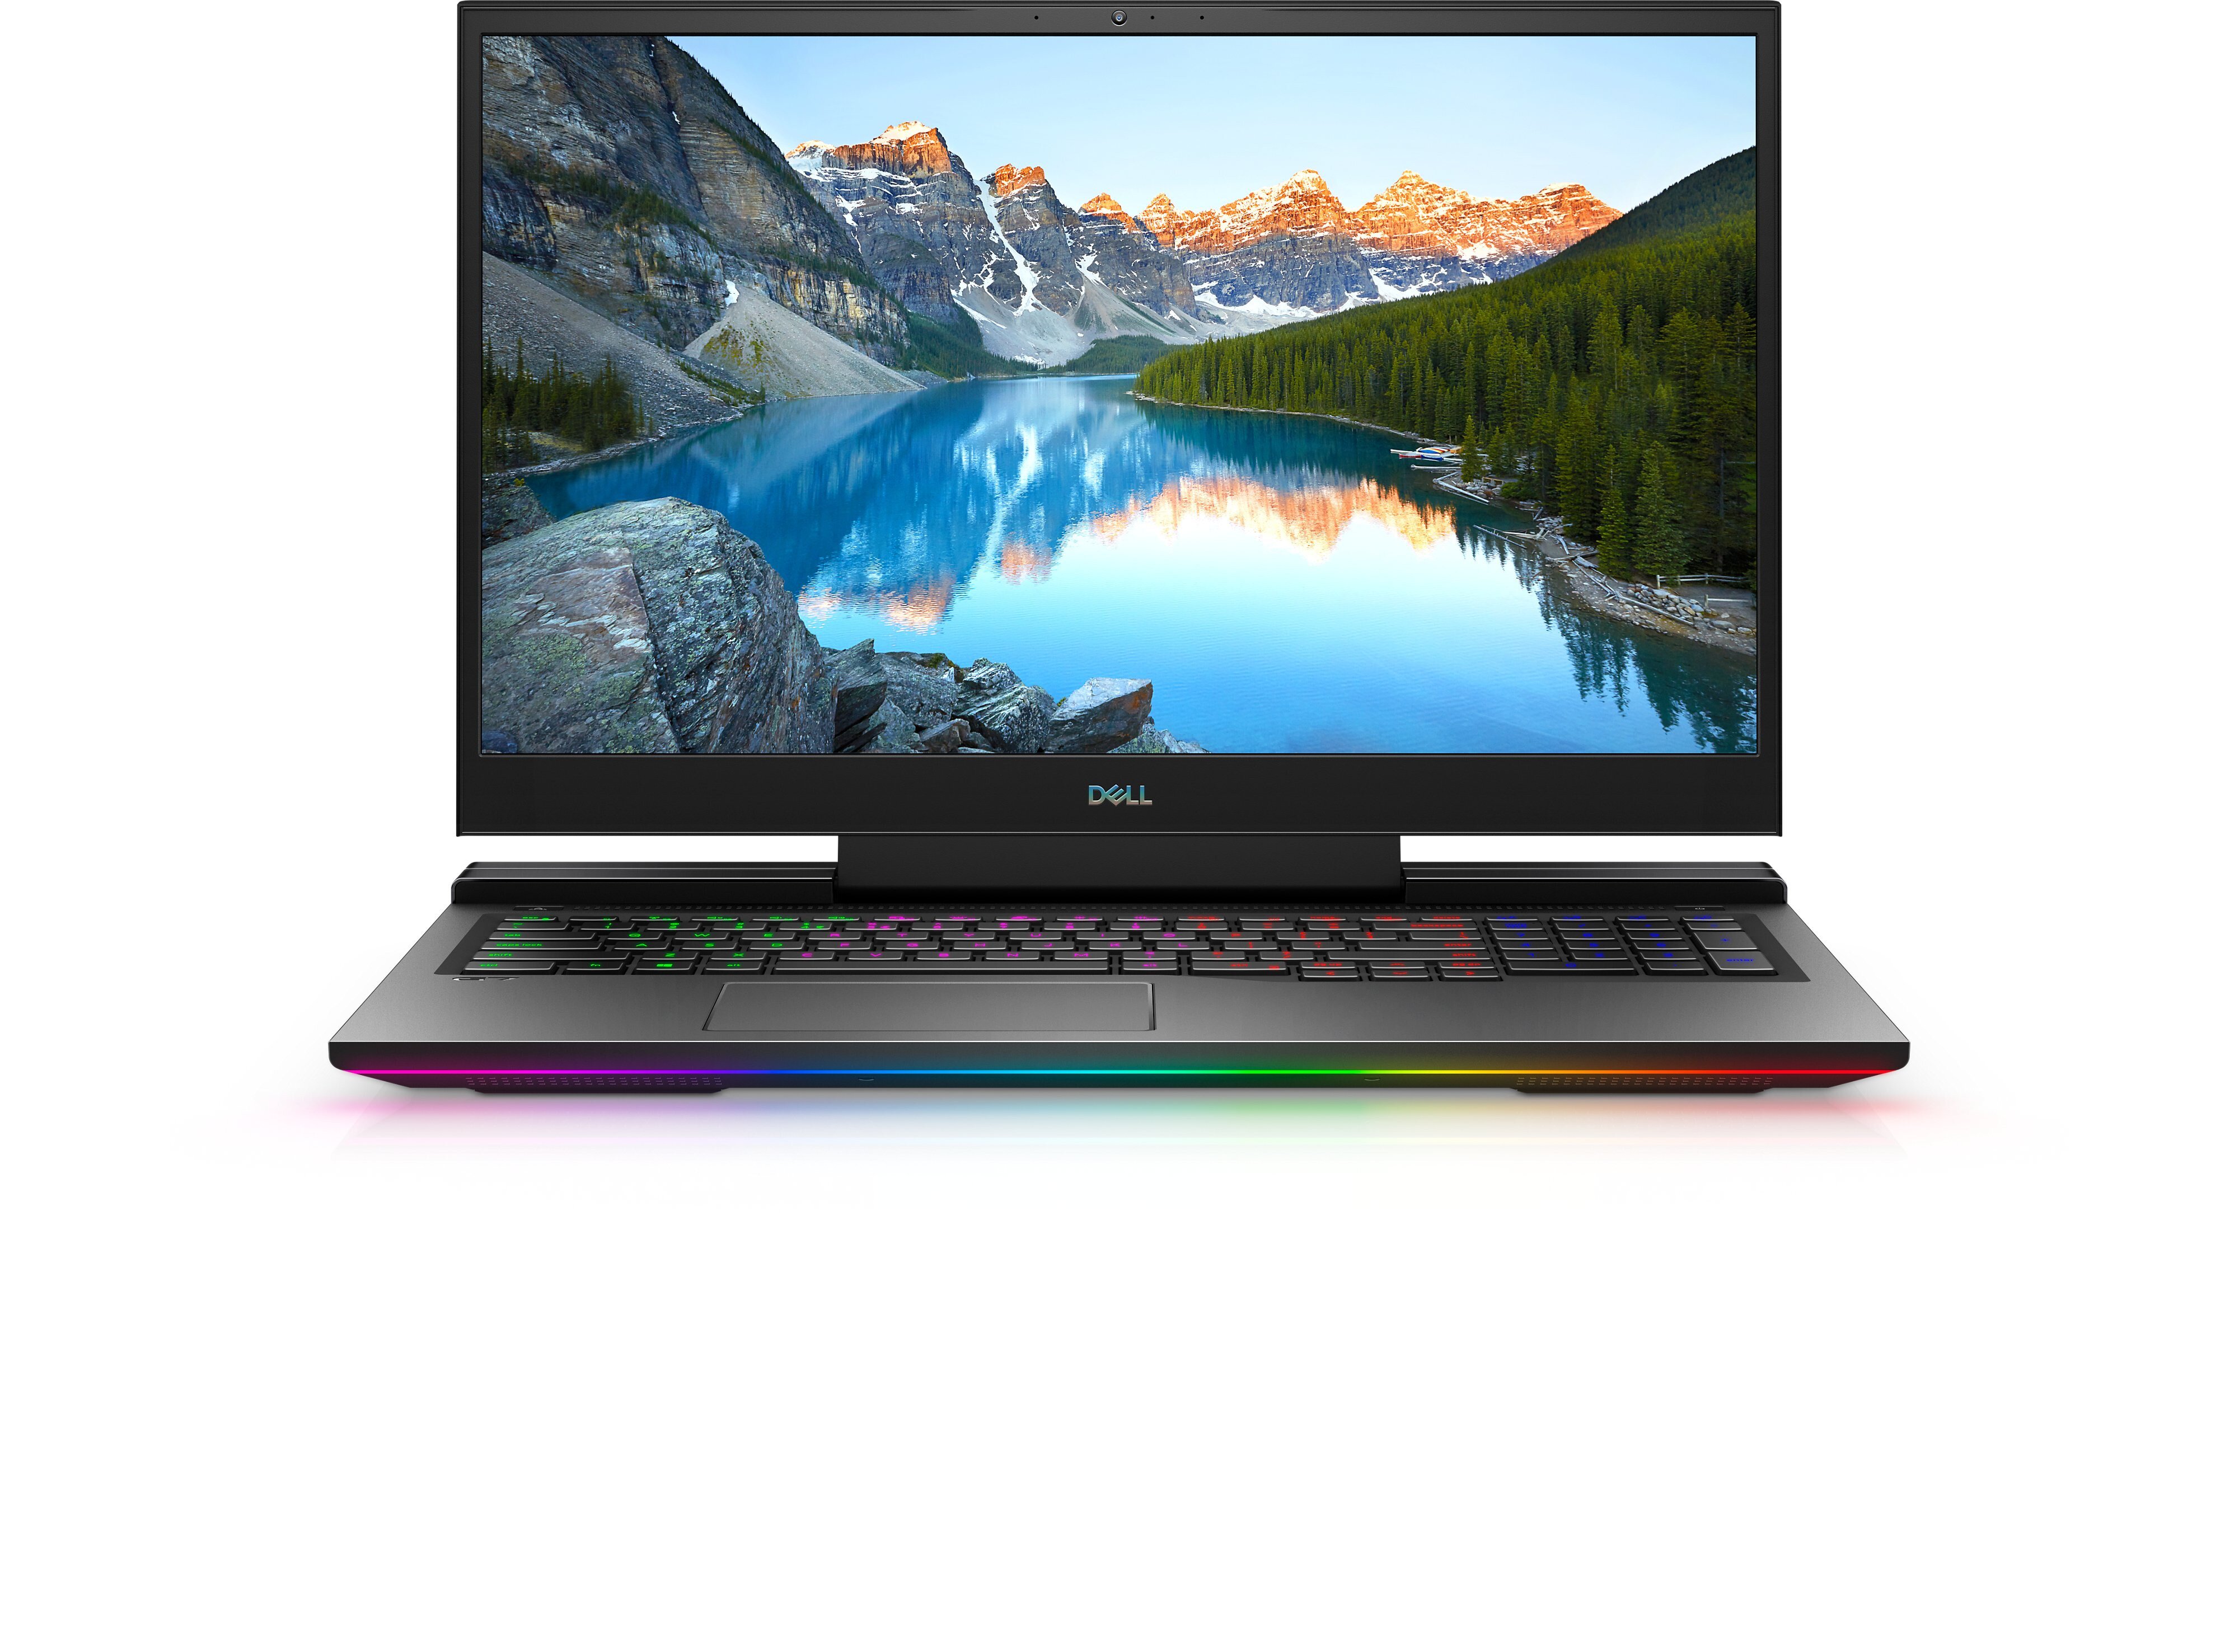 Buy Dell G7 17 7700 Gaming Laptop online in Pakistan - Tejar.pk